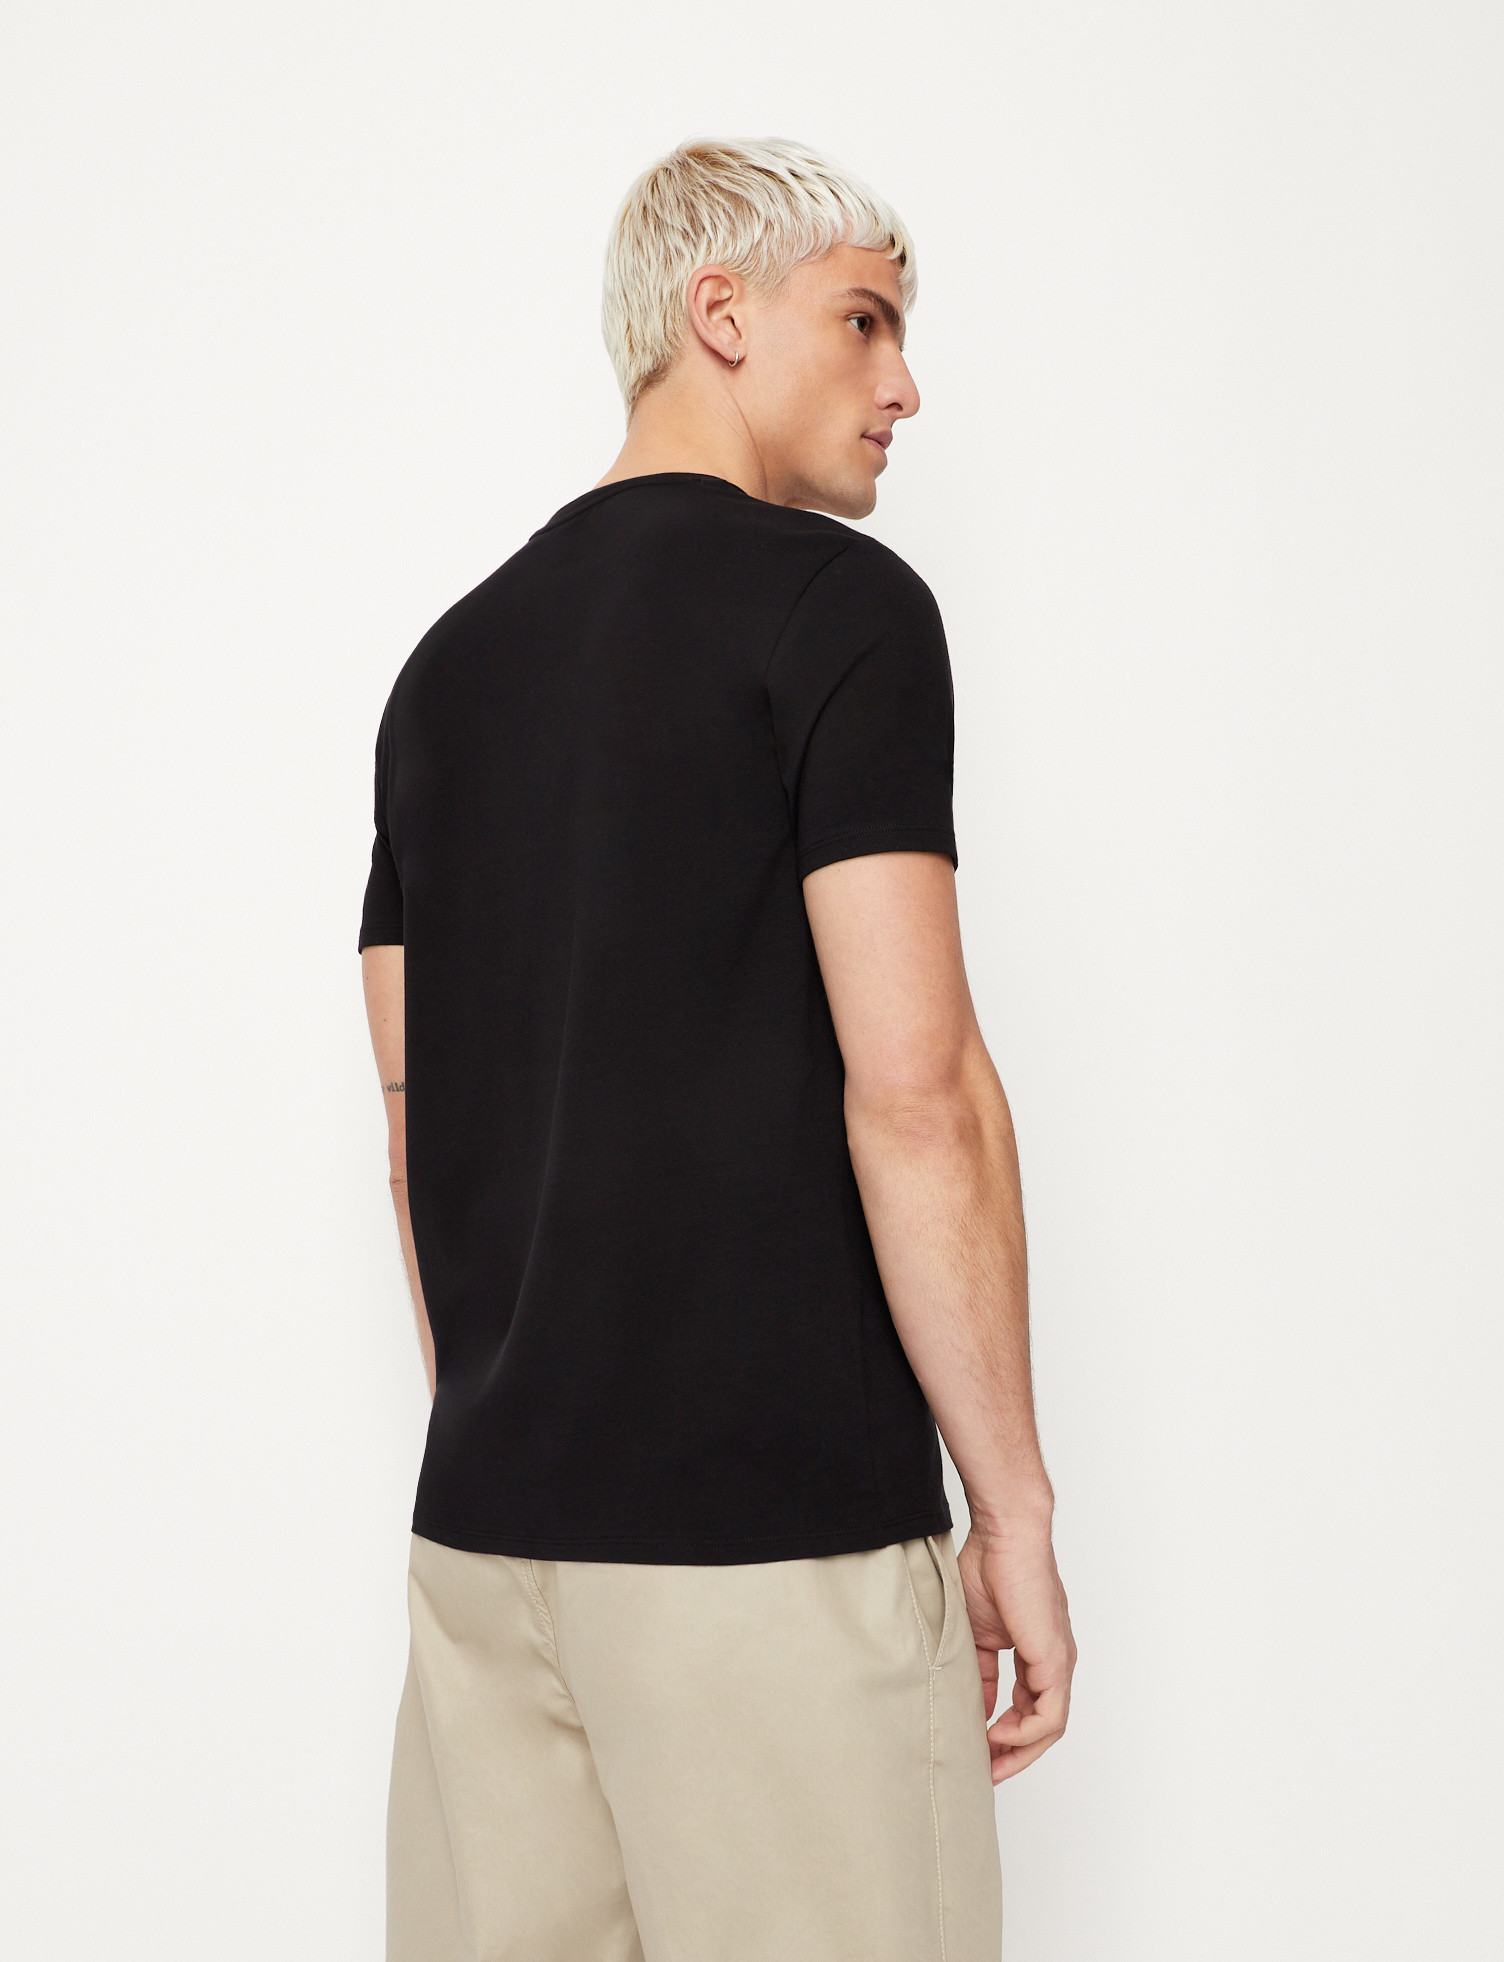 Armani Exchange - T-shirt con stampa slim fit, Nero, large image number 2